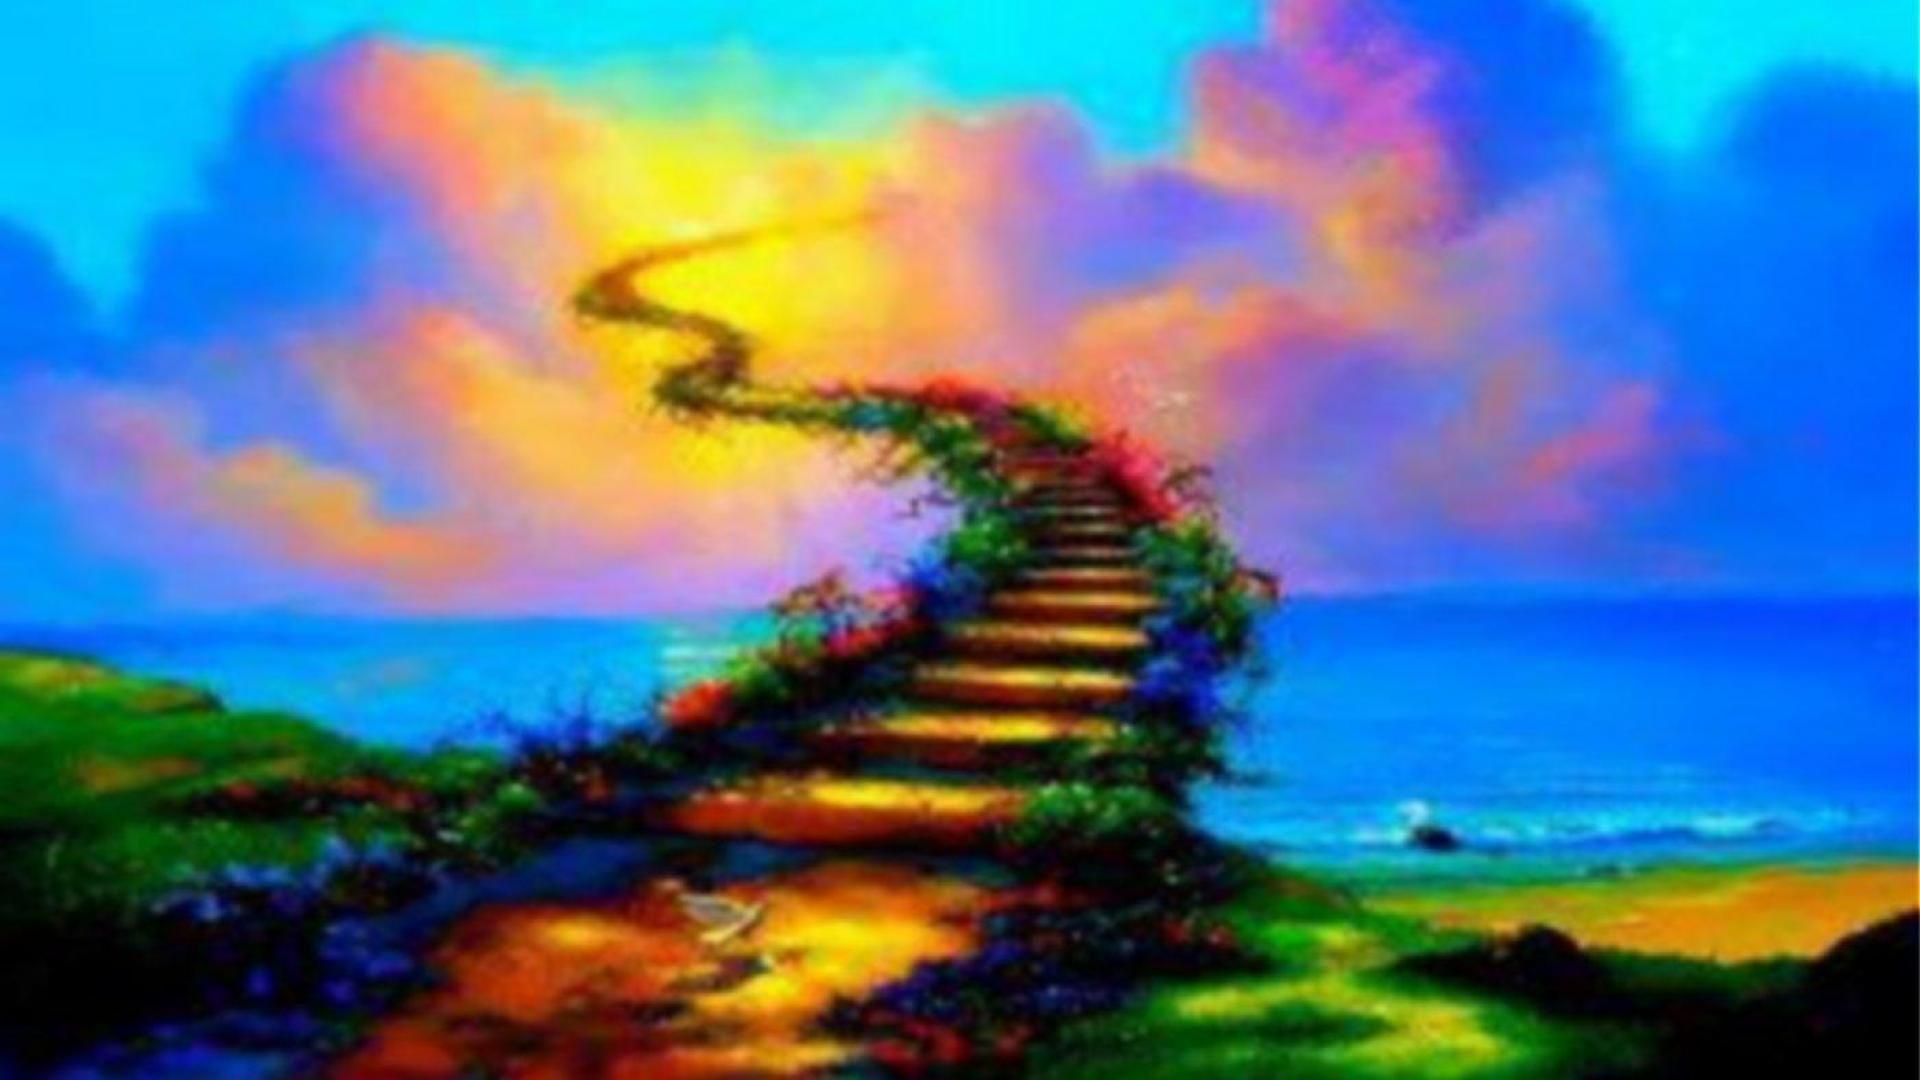 HD Wallpaper Heaven. Stairway to heaven